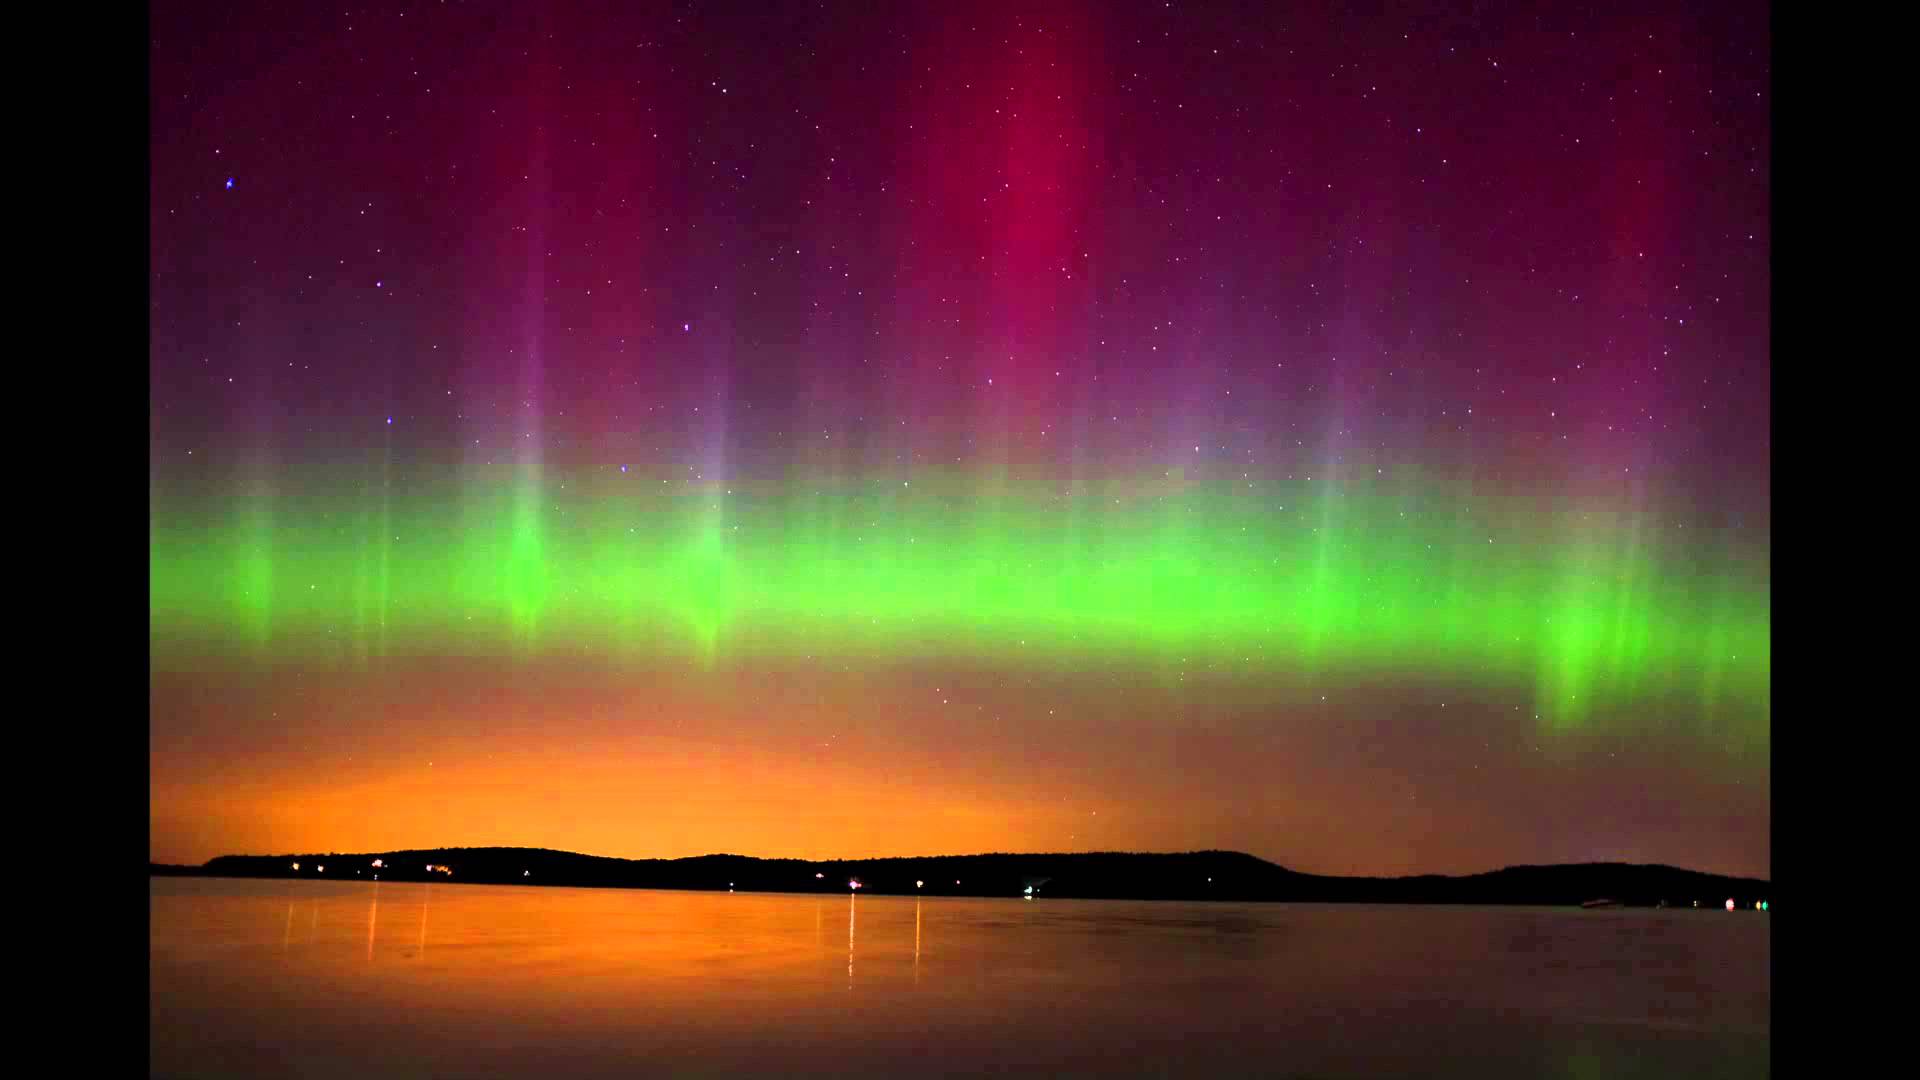 Northern Lights (Aurora Borealis) in Malletts Bay, Vermont on 10/8/2013